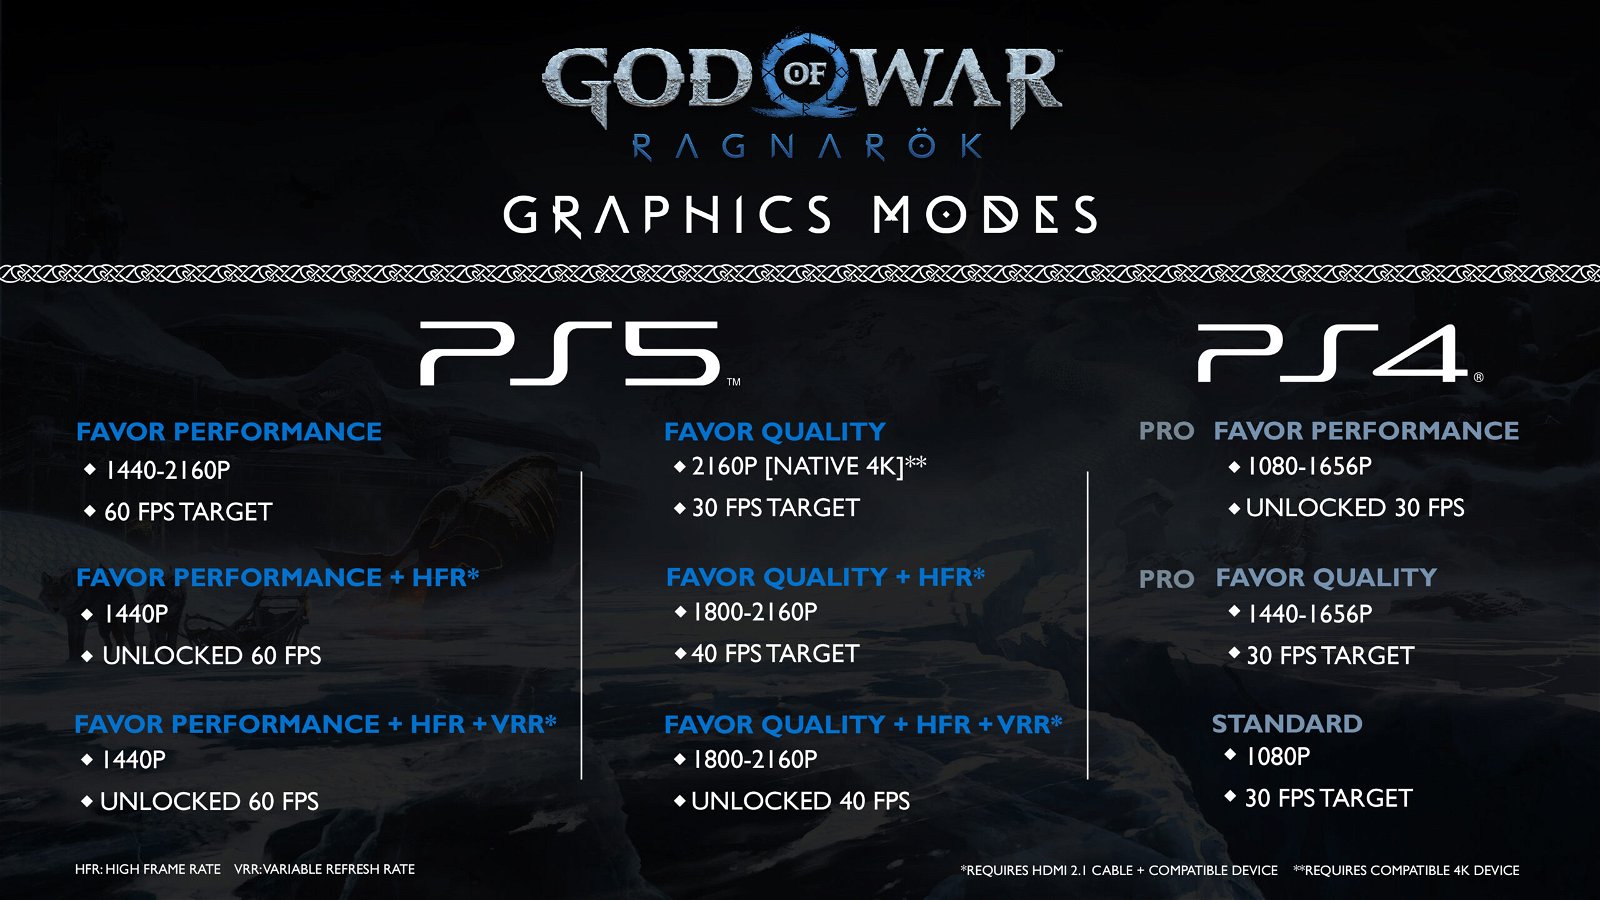 God of War Ragnarok graphic modes